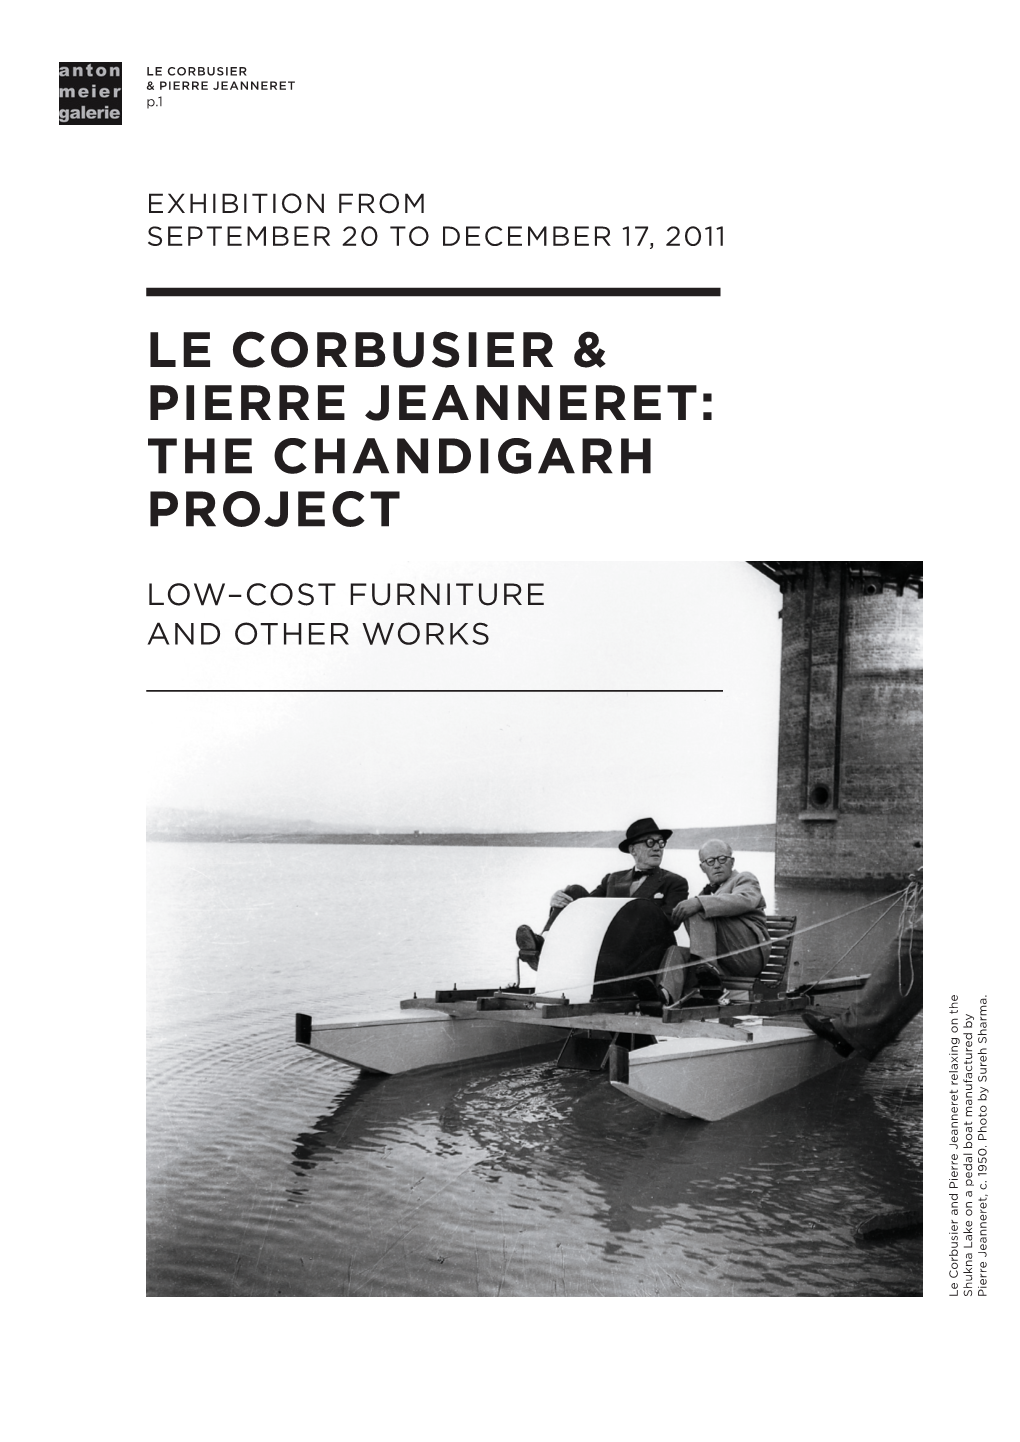 Le Corbusier & Pierre Jeanneret: the Chandigarh Project